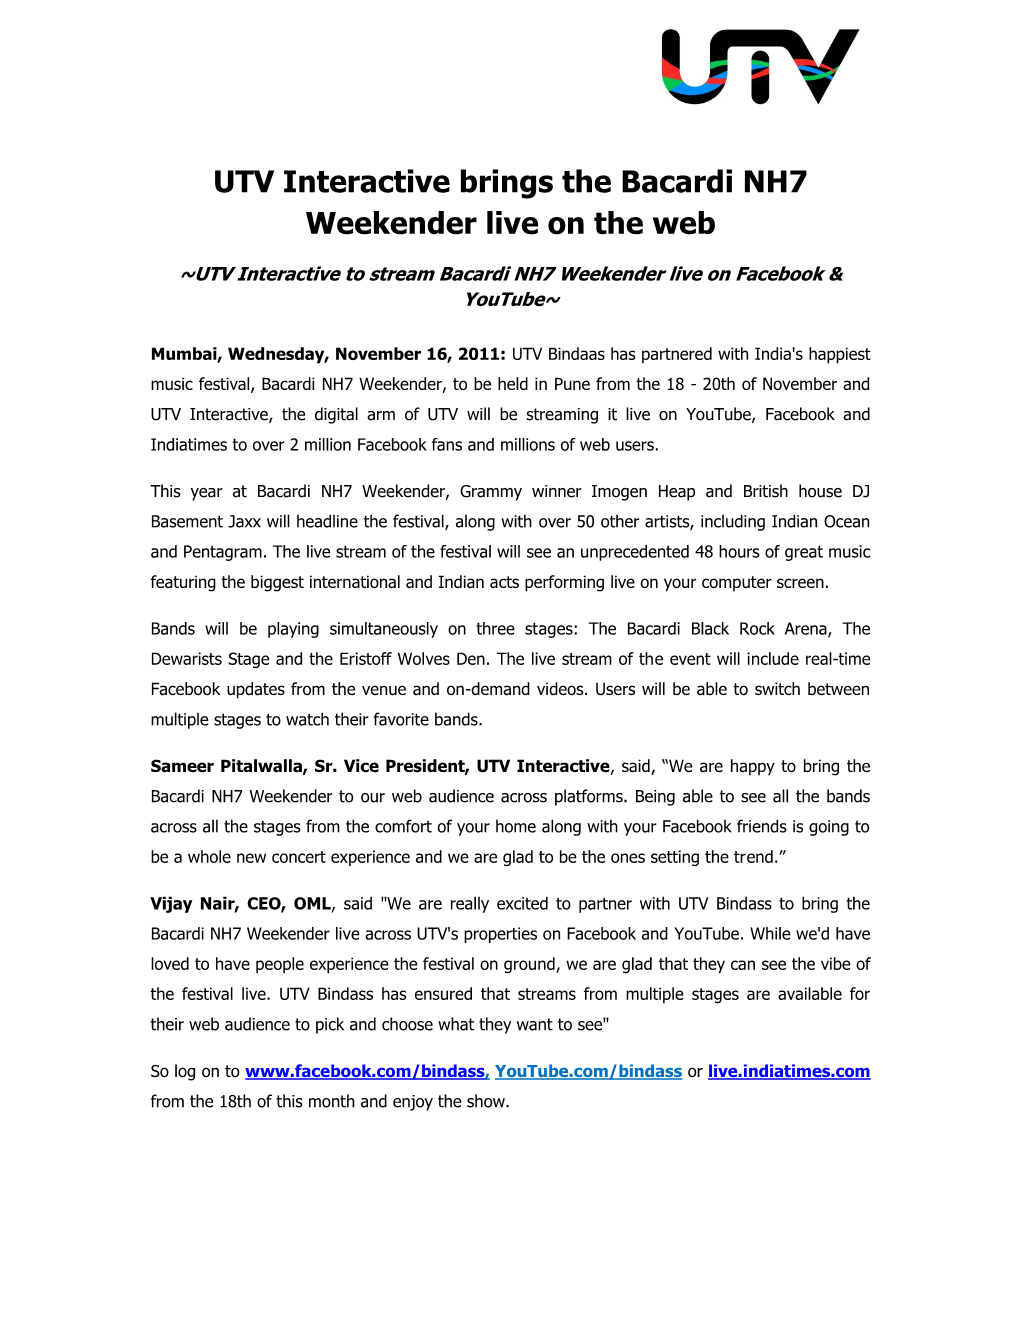 UTV Interactive Brings the Bacardi NH7 Weekender Live on the Web